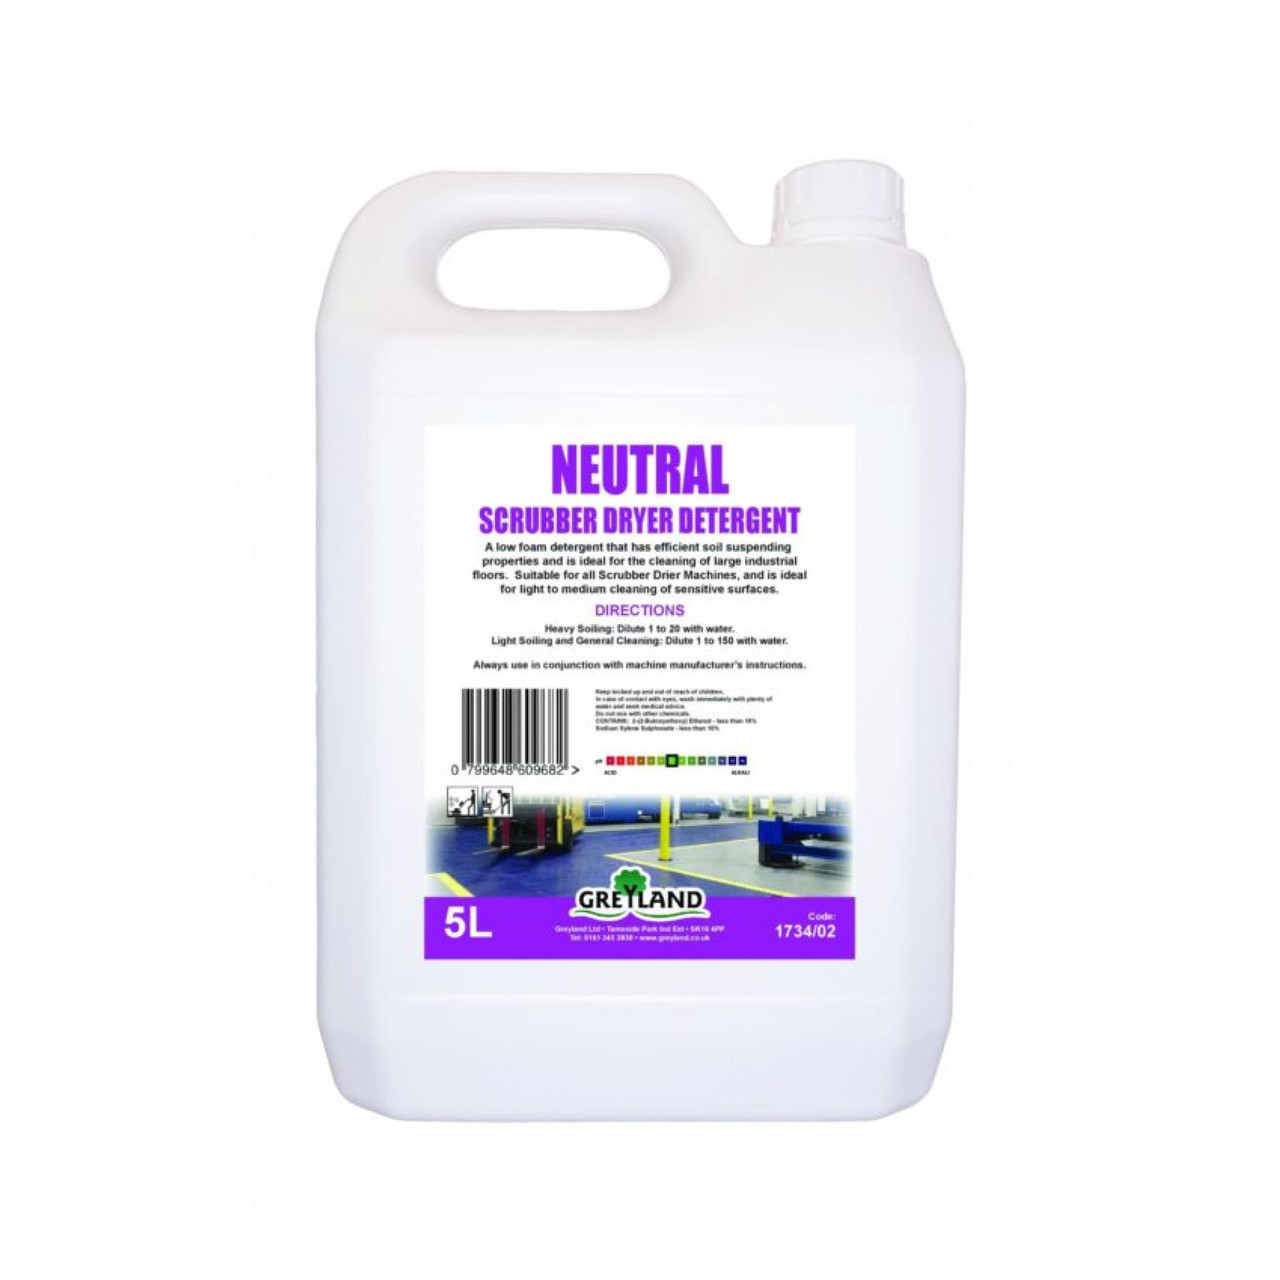 Greylands Neutral Scrubber Dryer Detergent 5Ltr